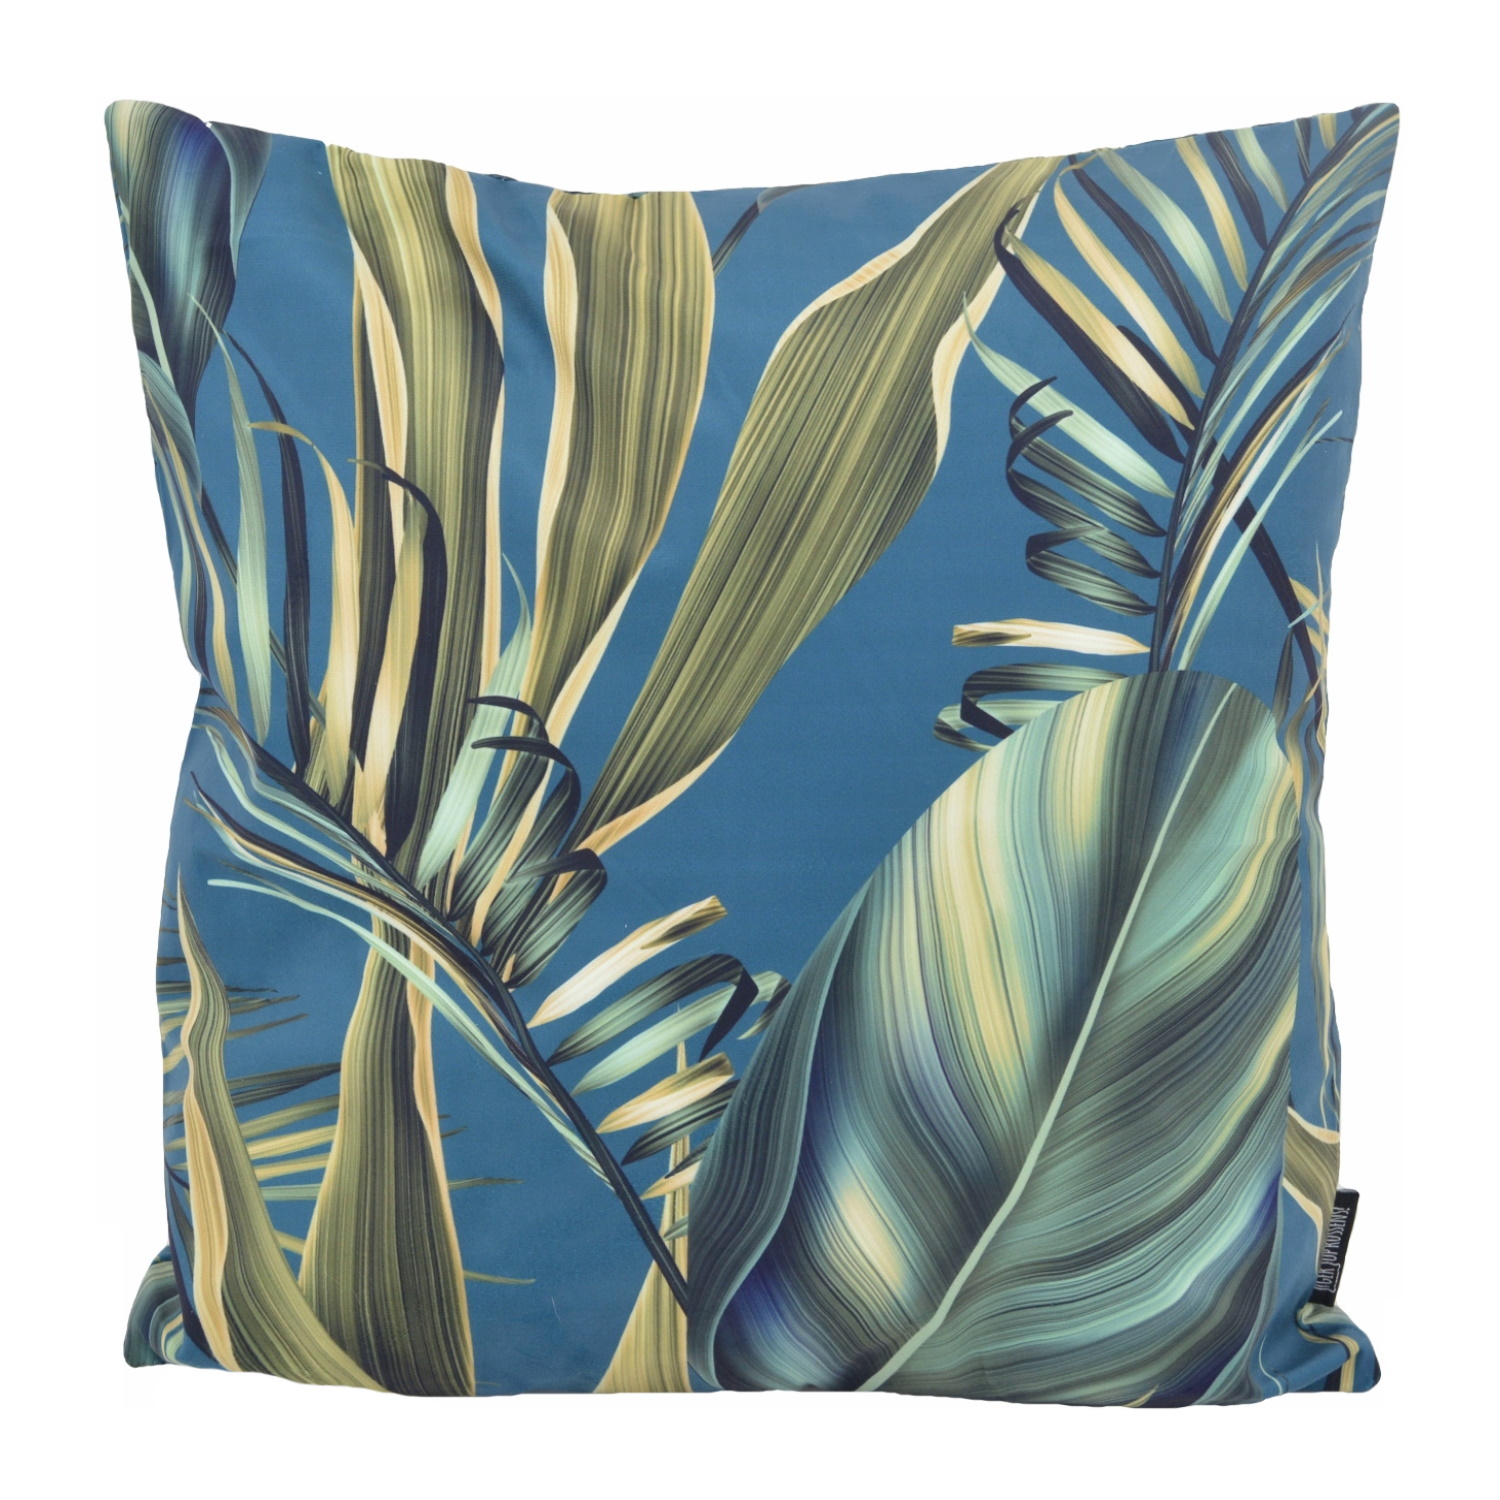 Vertrappen petticoat papier Blue Strelitzia Palm | 45 x 45 cm | Kussenhoes | Katoen | Gek op kussens!